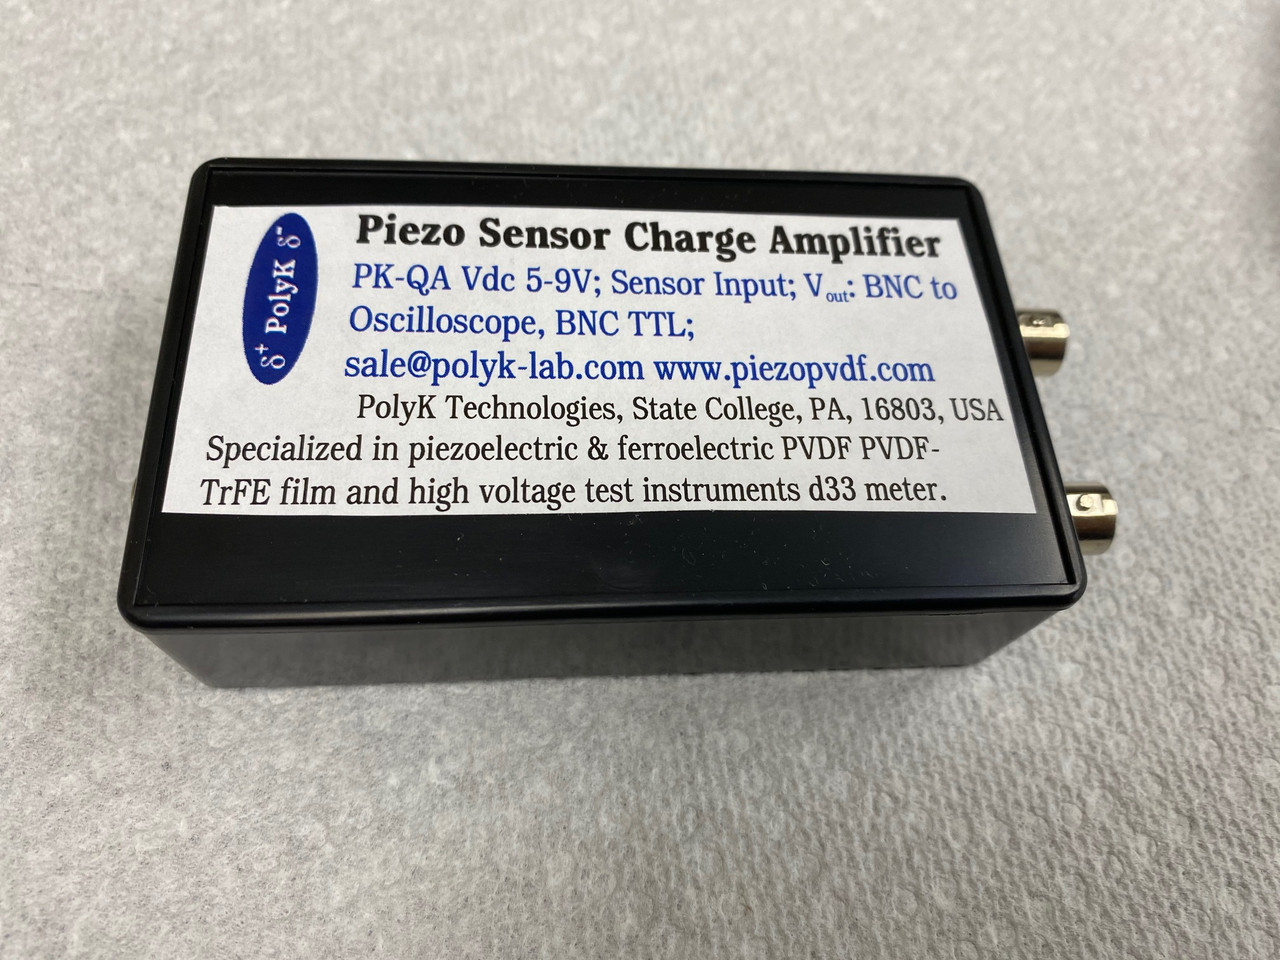 Charge Amplifier for Piezo Sensor